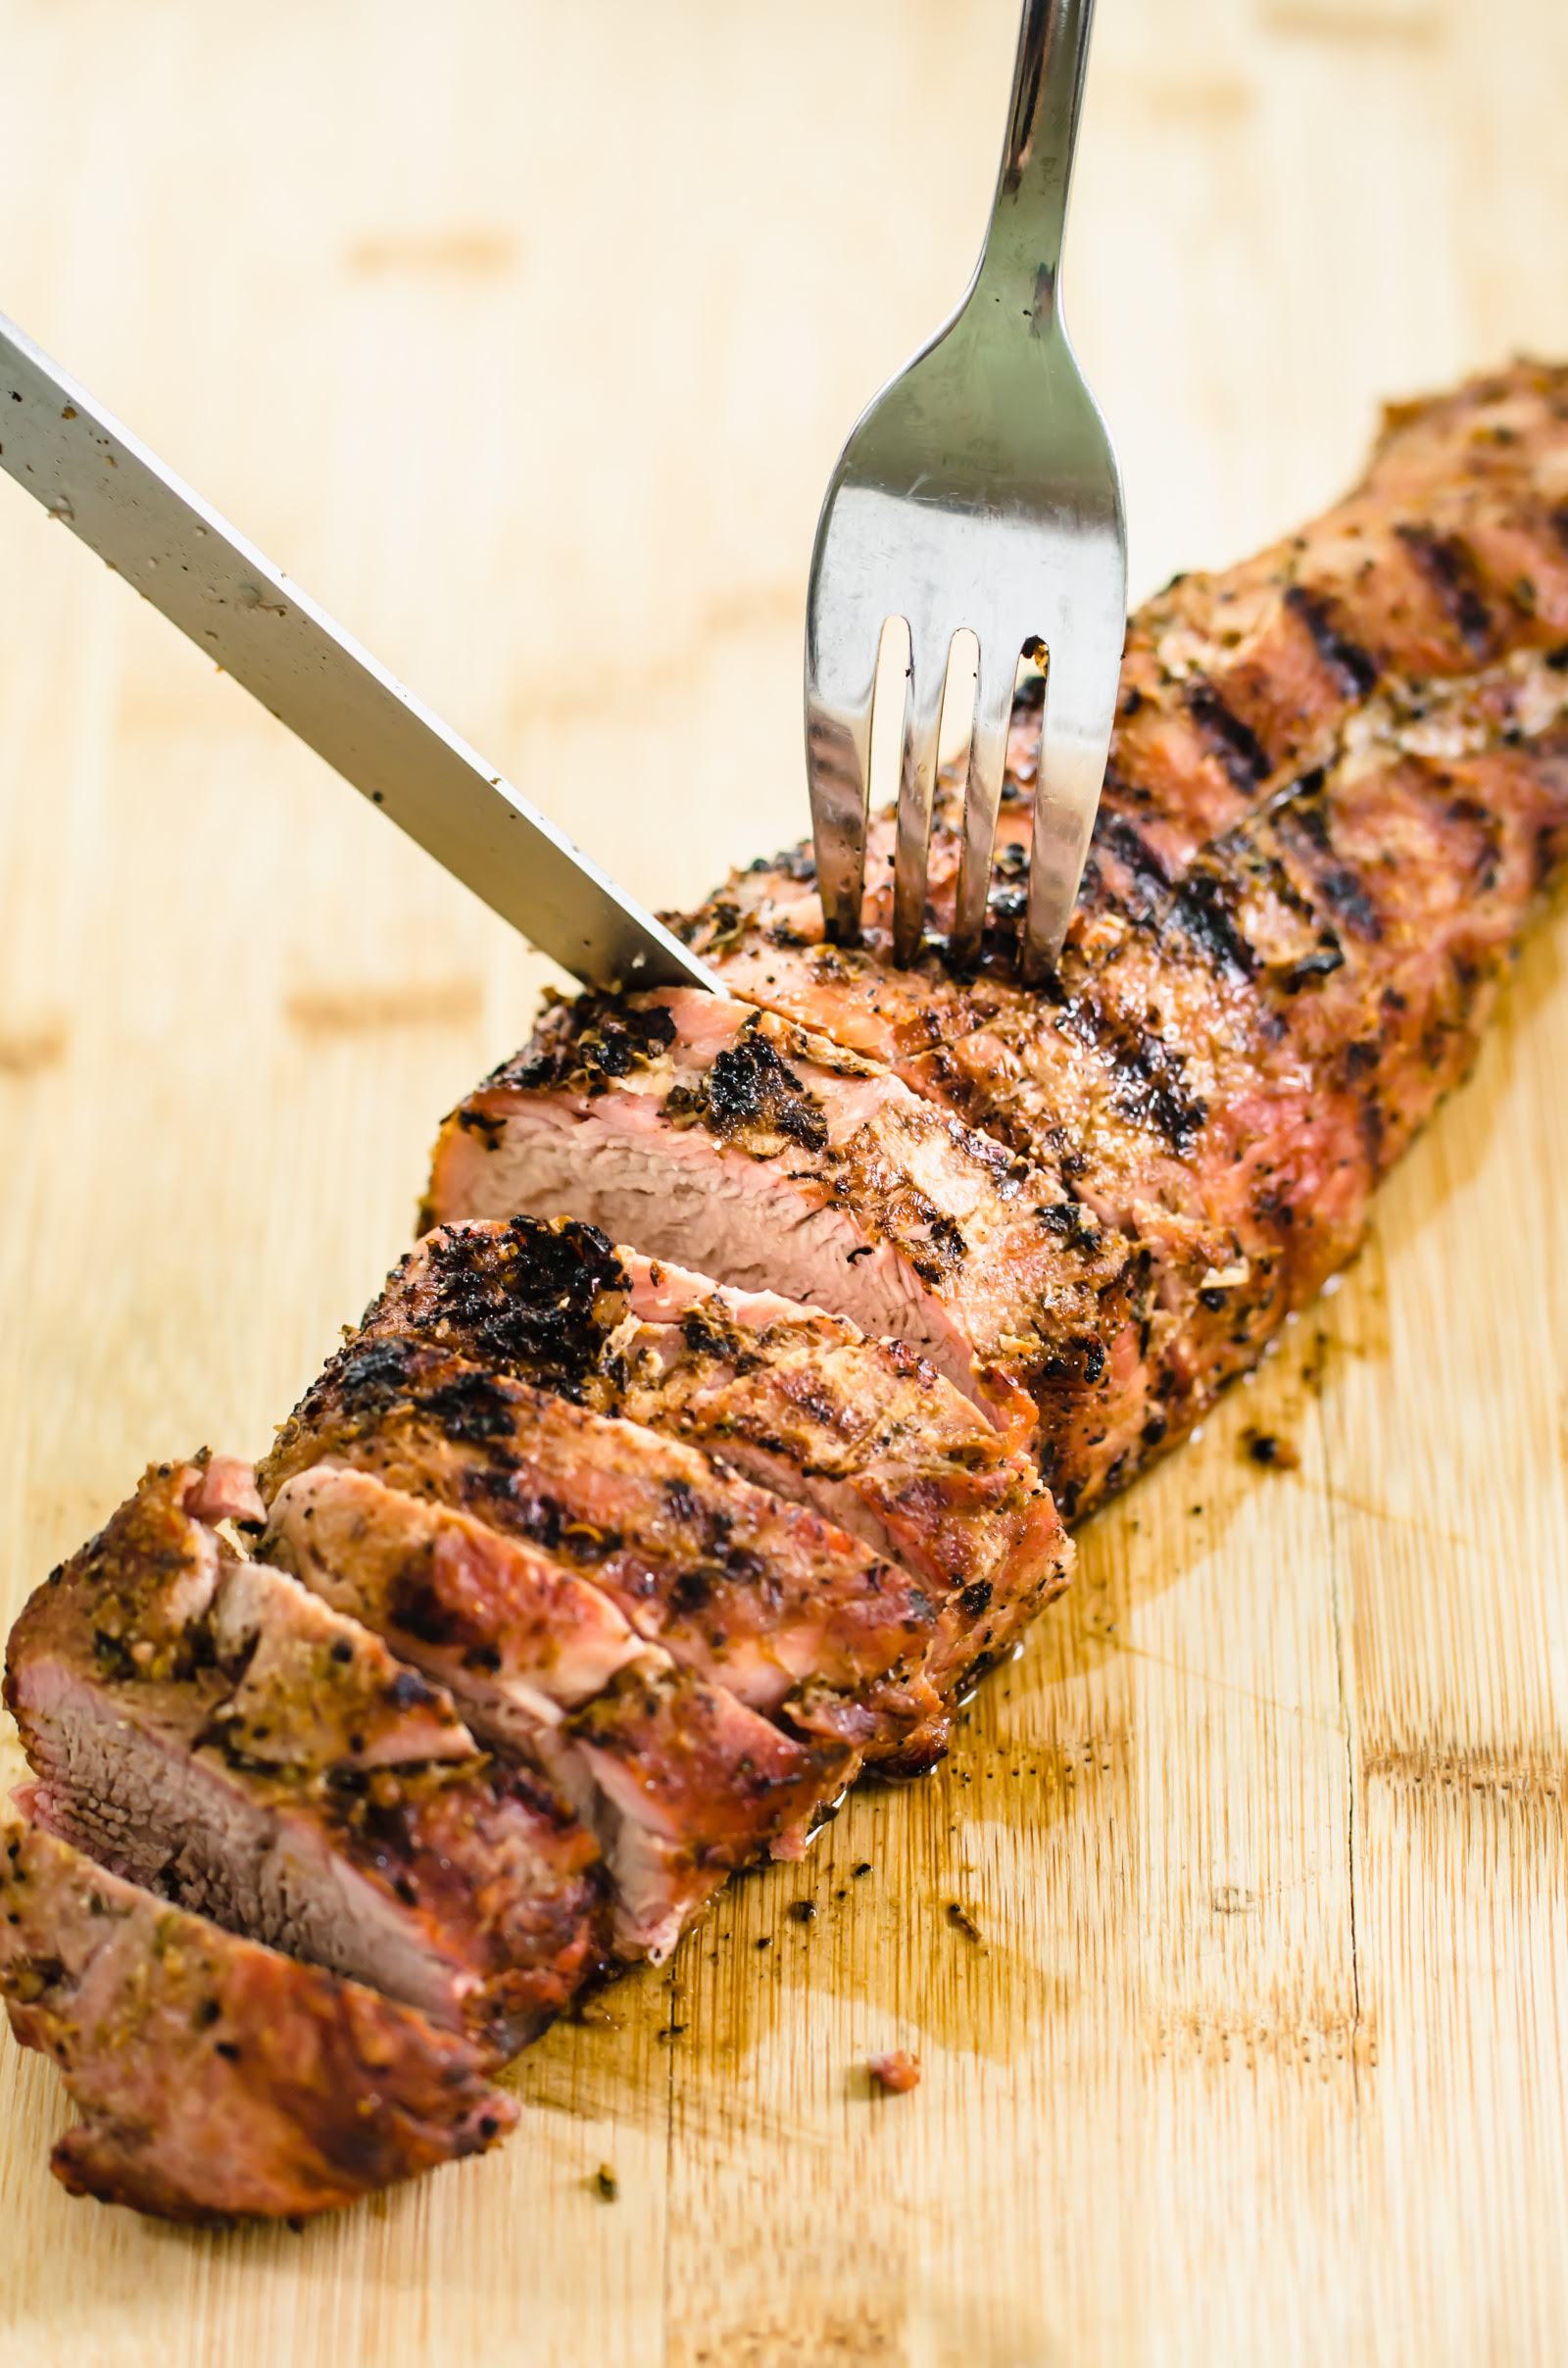 roasted pork tenderloin with seasoning rub being sliced on a wooden cutting board.